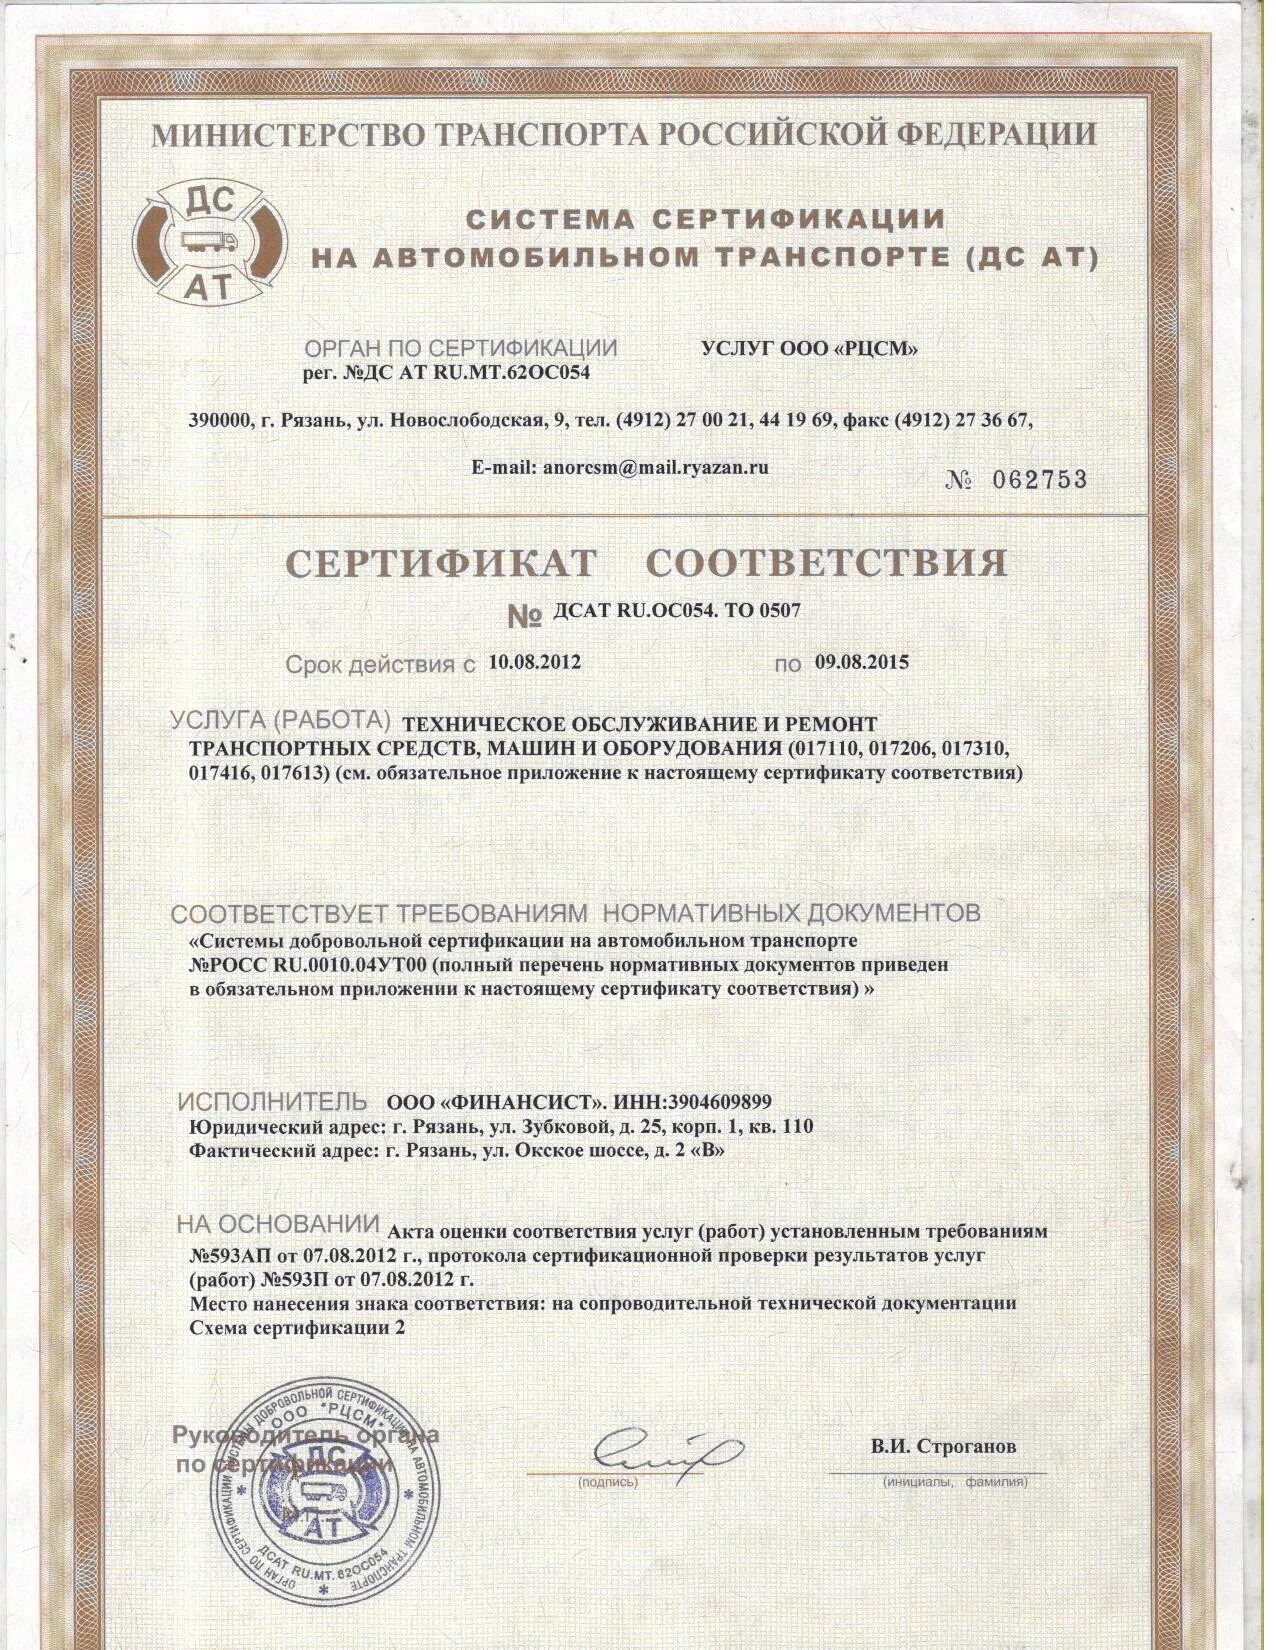 Deutz сертификат соответствия. Акватрон 6 сертификат соответствия. Запчасти Deutz сертификат. Акватрон сертификат соответствия на продукцию.